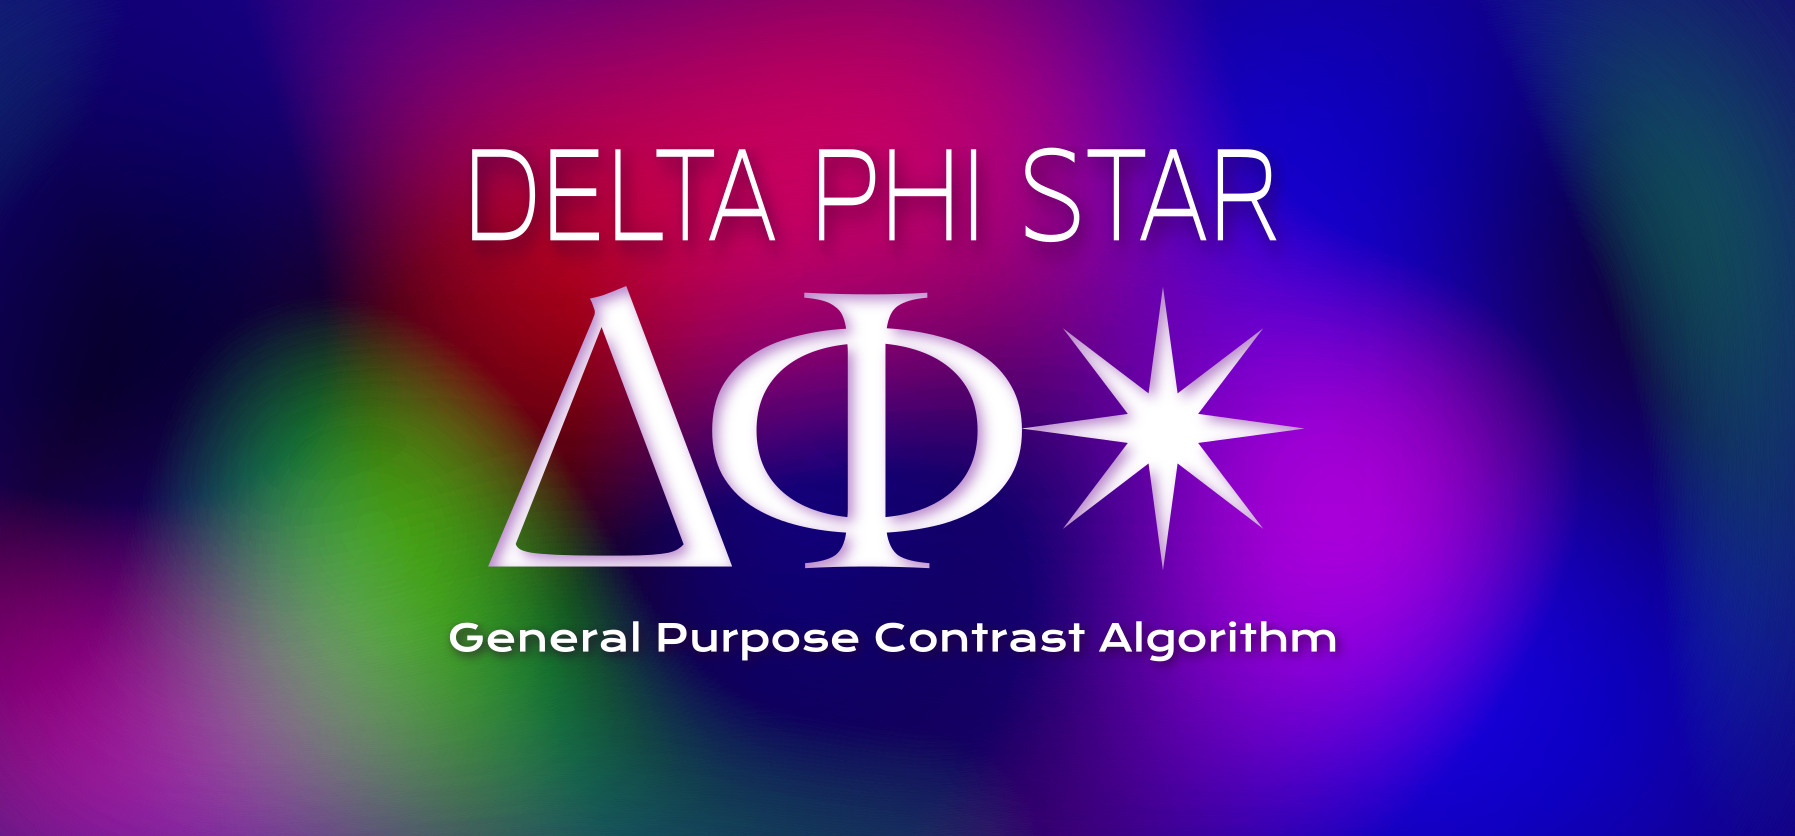 delta phi star logo general purpose contrast algorithm